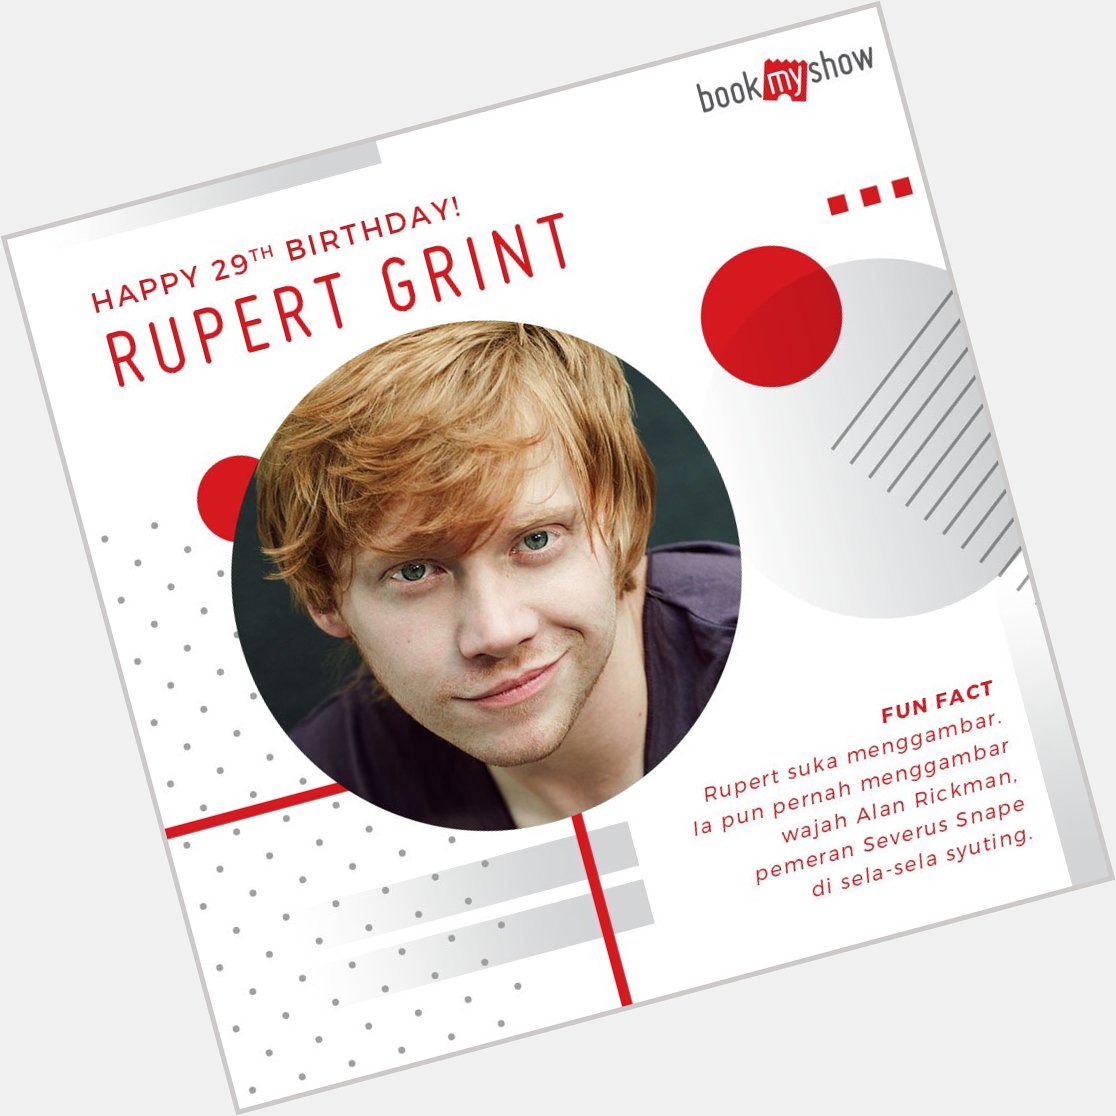 Happy birthday Ron Weasley a.k.a. Rupert Grint!    